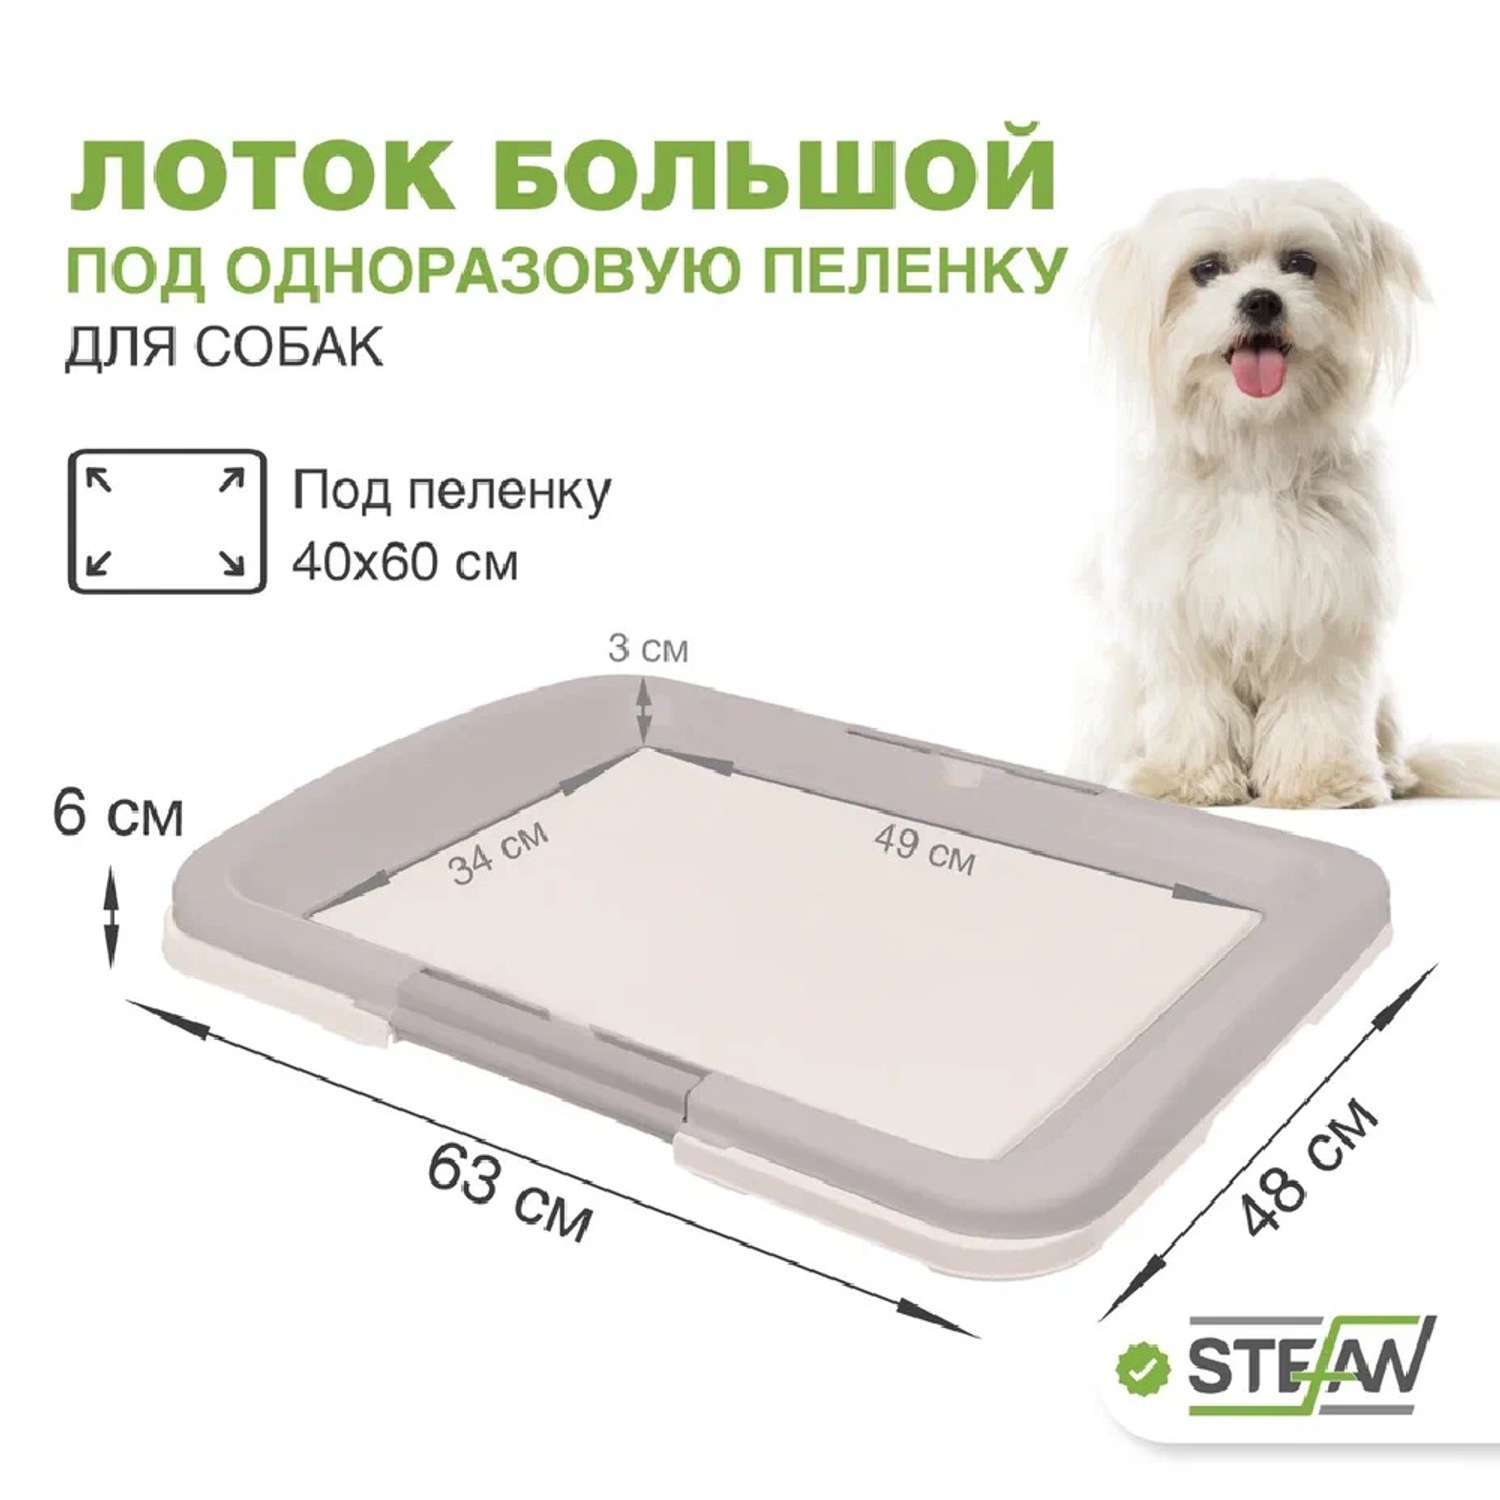 Туалет лоток для собак Stefan под одноразовую пеленку большой L размер 63x48x6 серый - фото 1